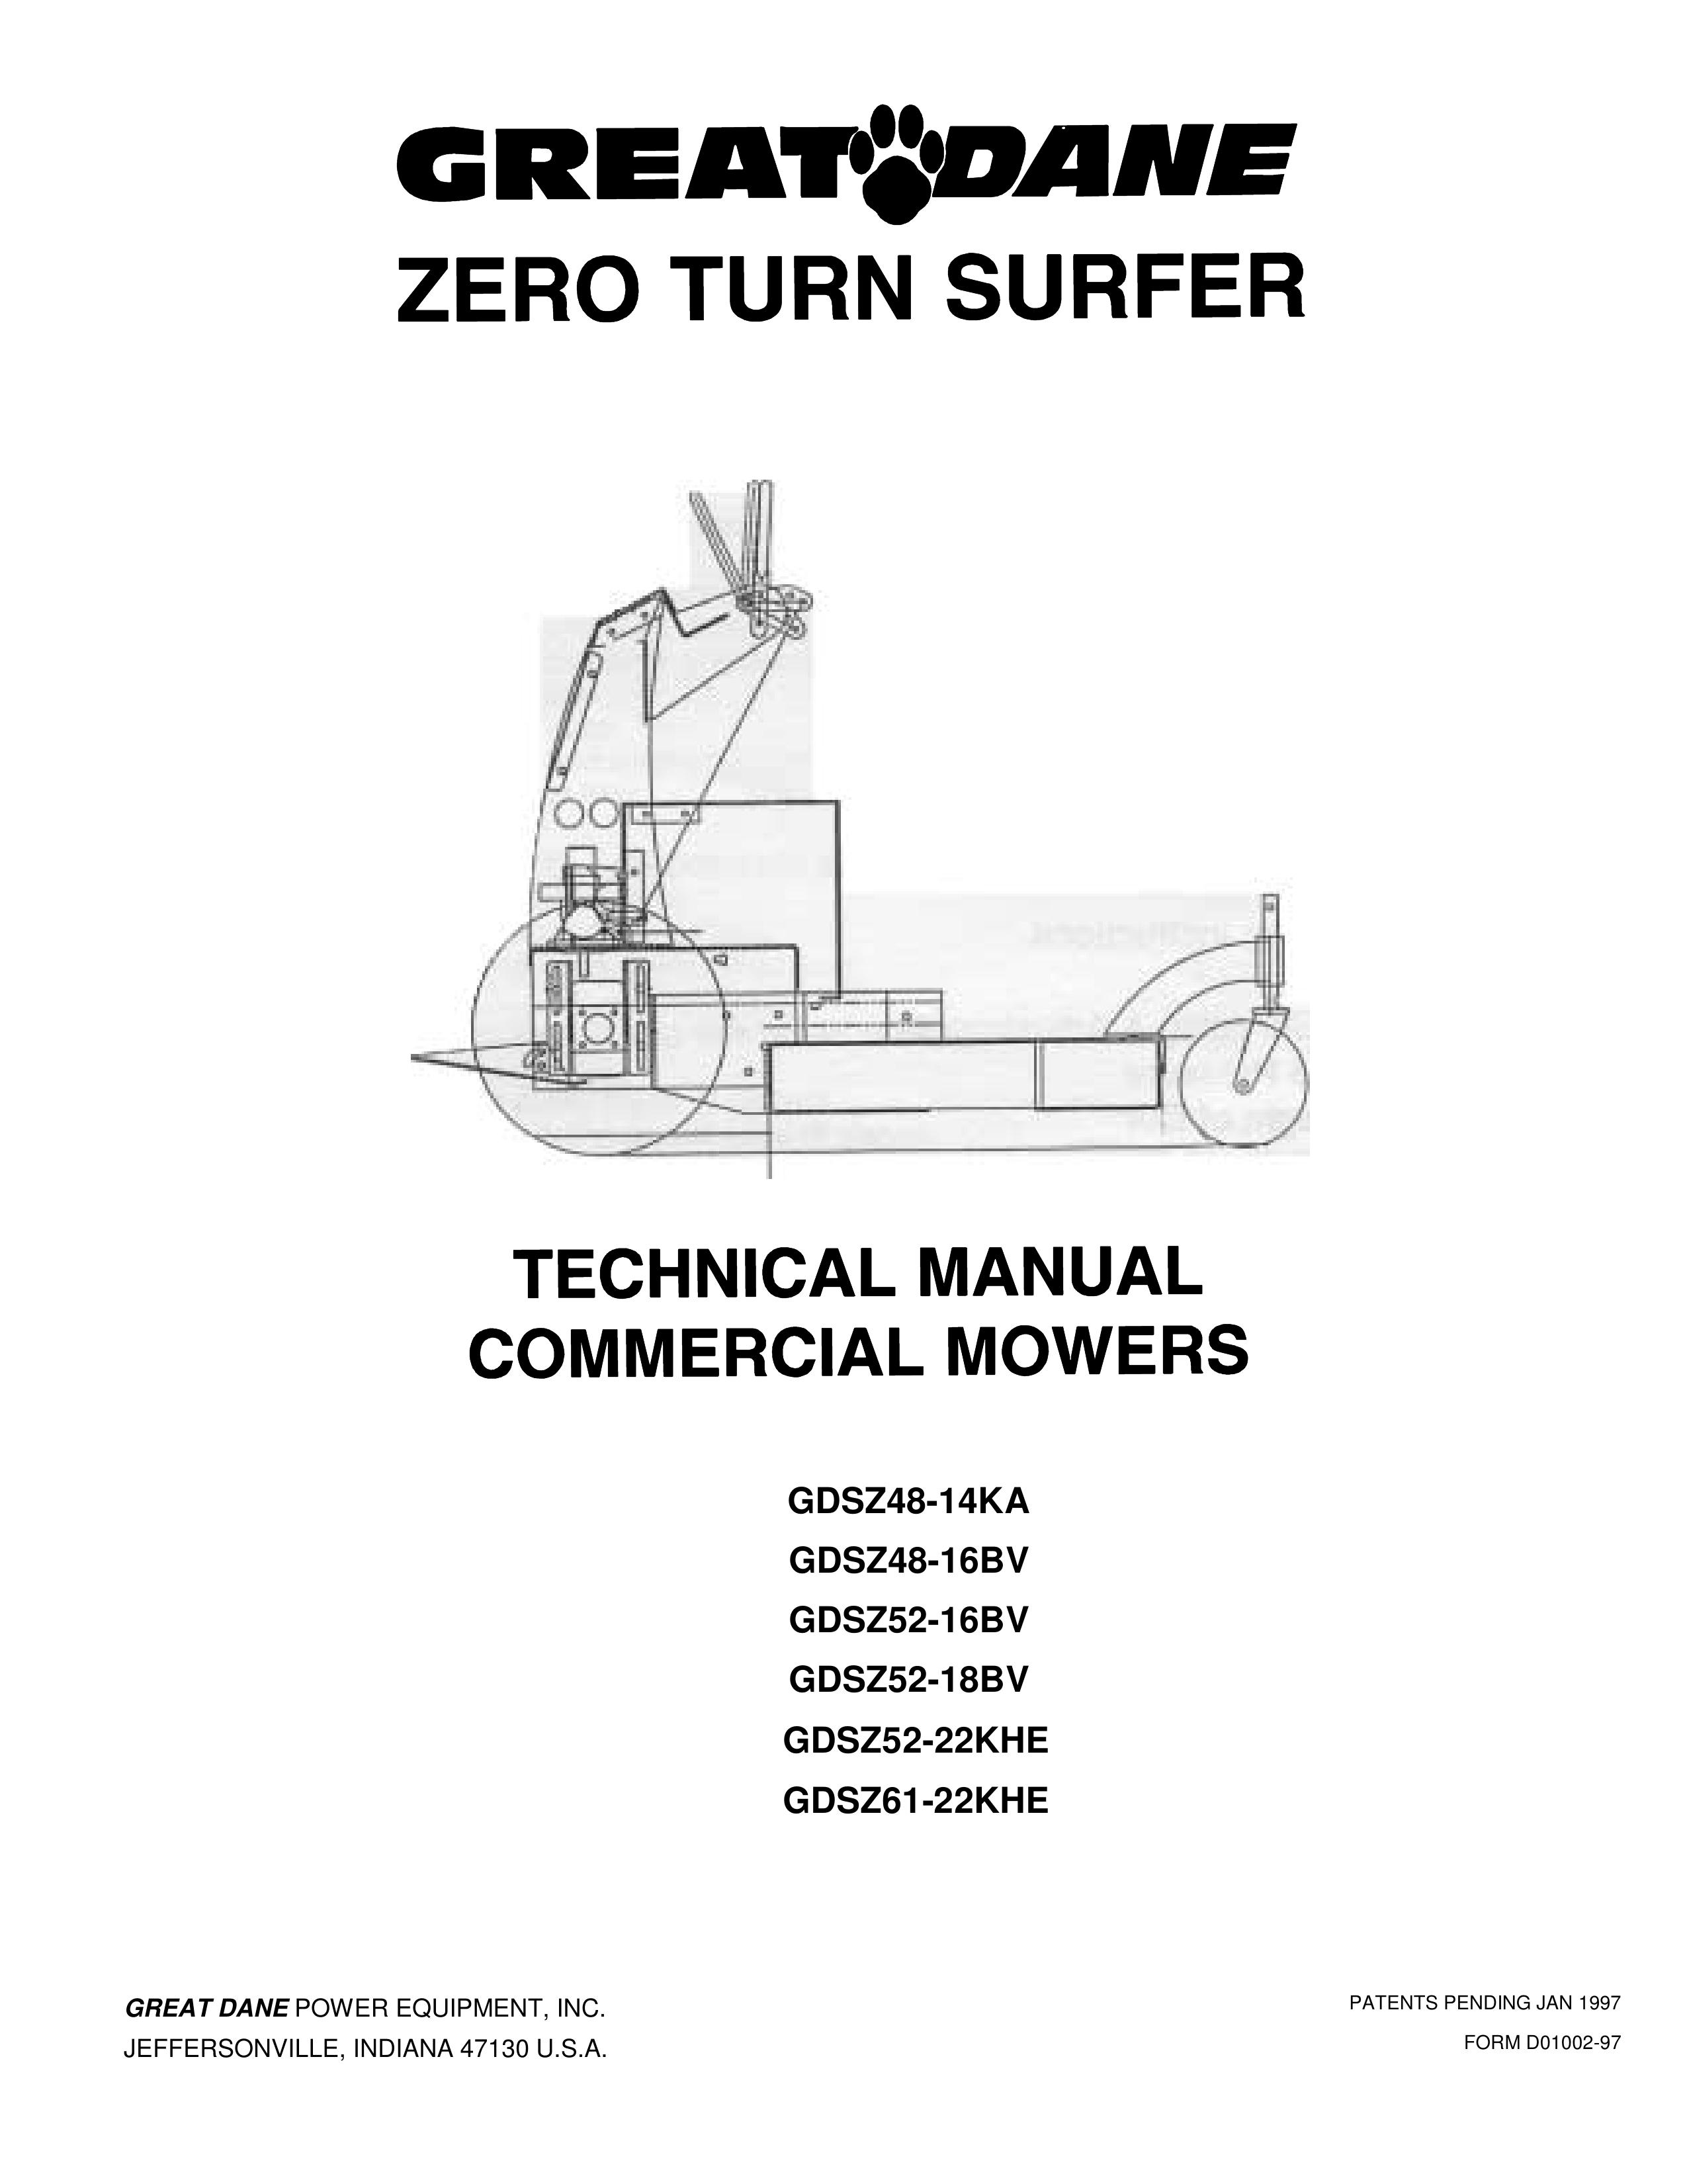 Great Dane GDSZ48-14KA Lawn Mower User Manual